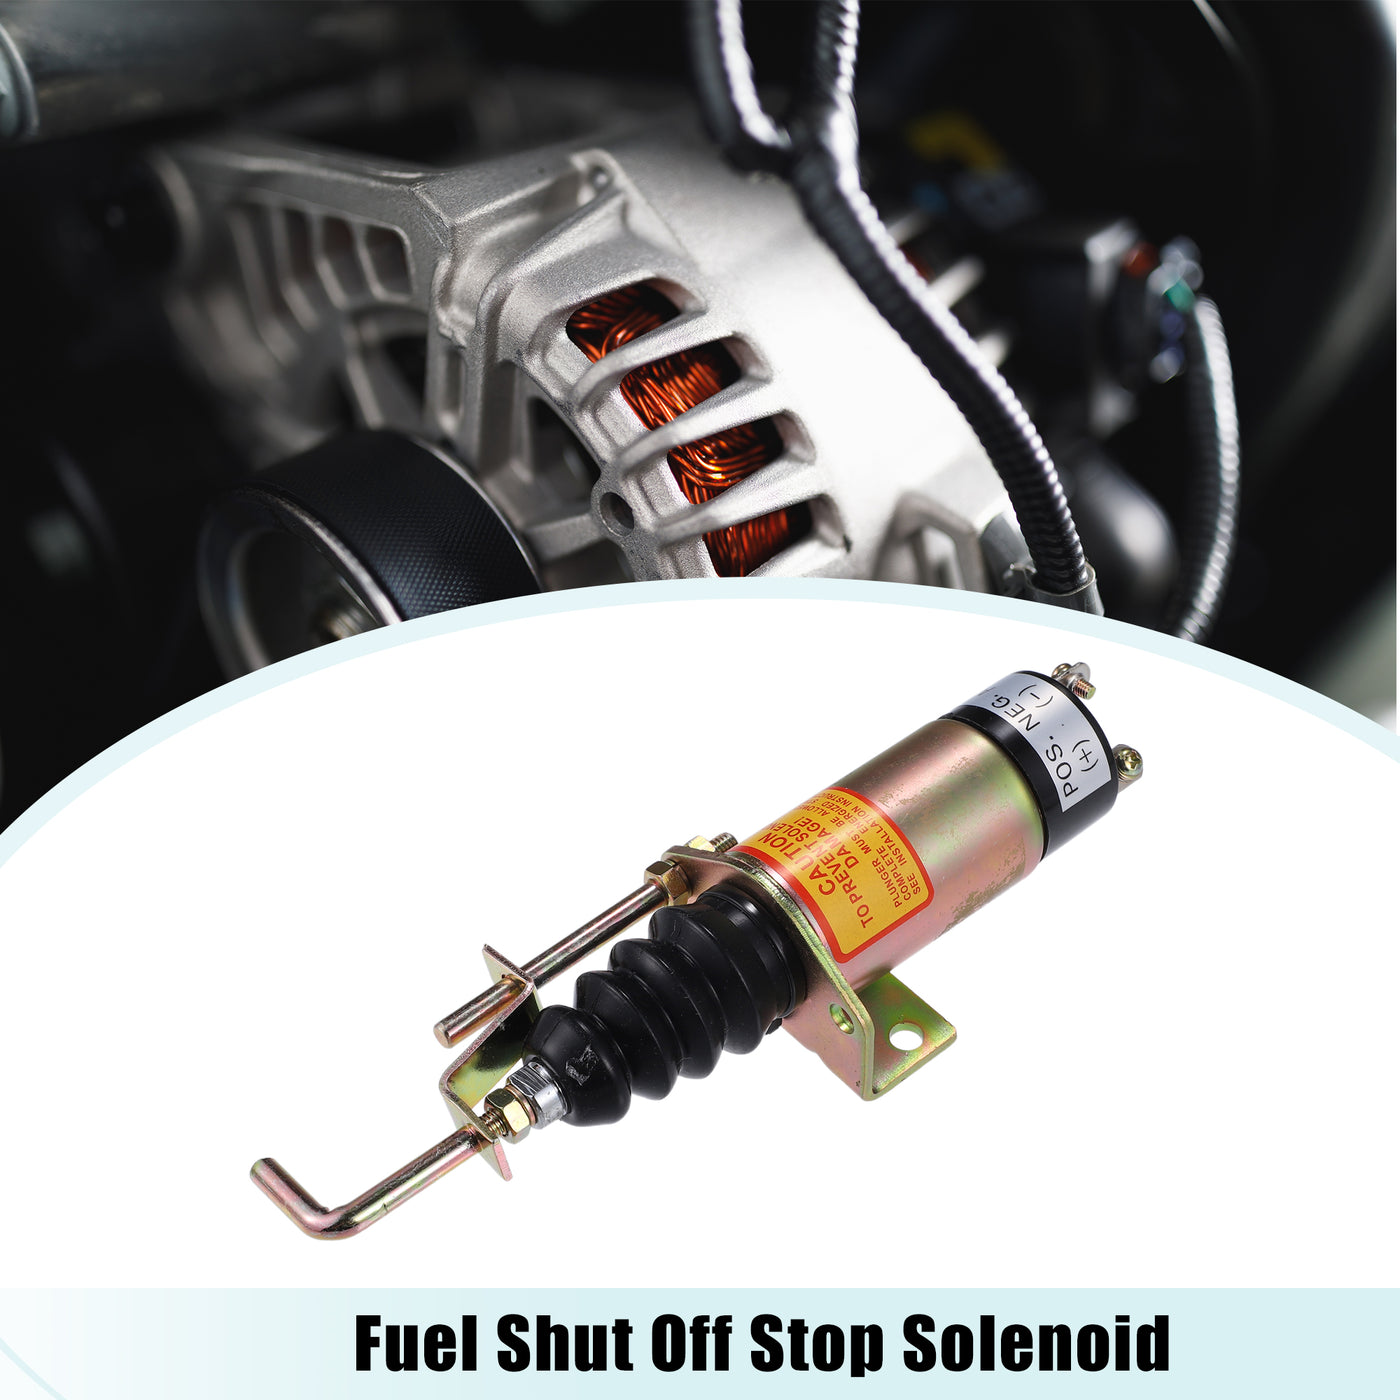 ACROPIX Fuel Shut Off Stop Solenoid Valve 12V 36607197 1502-12C7U2B2S1 Fit for Diesel Engine - Pack of 1 Bronze Tone